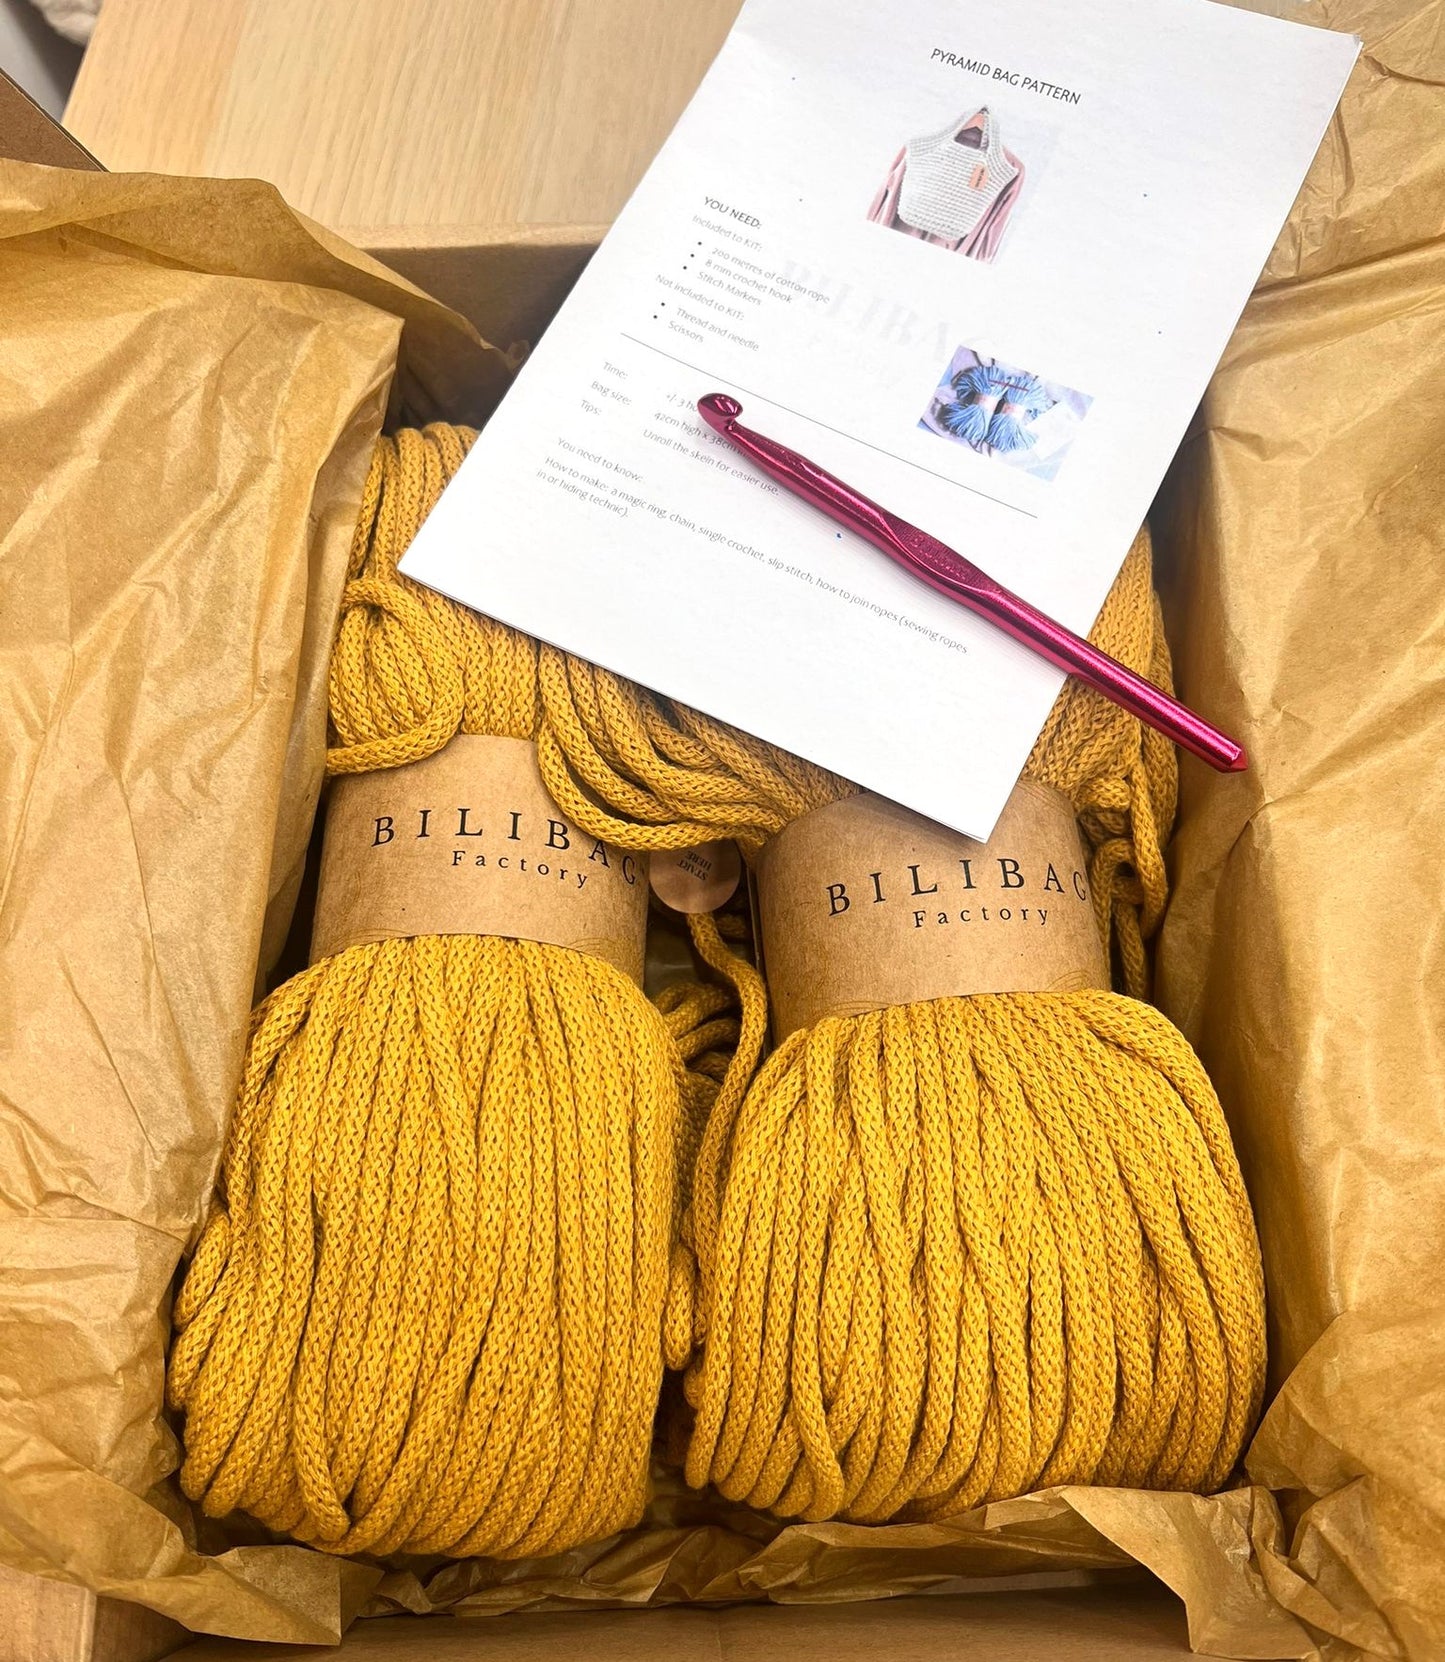 Bilibag, Crochet Bag Pyramid Bag Kit